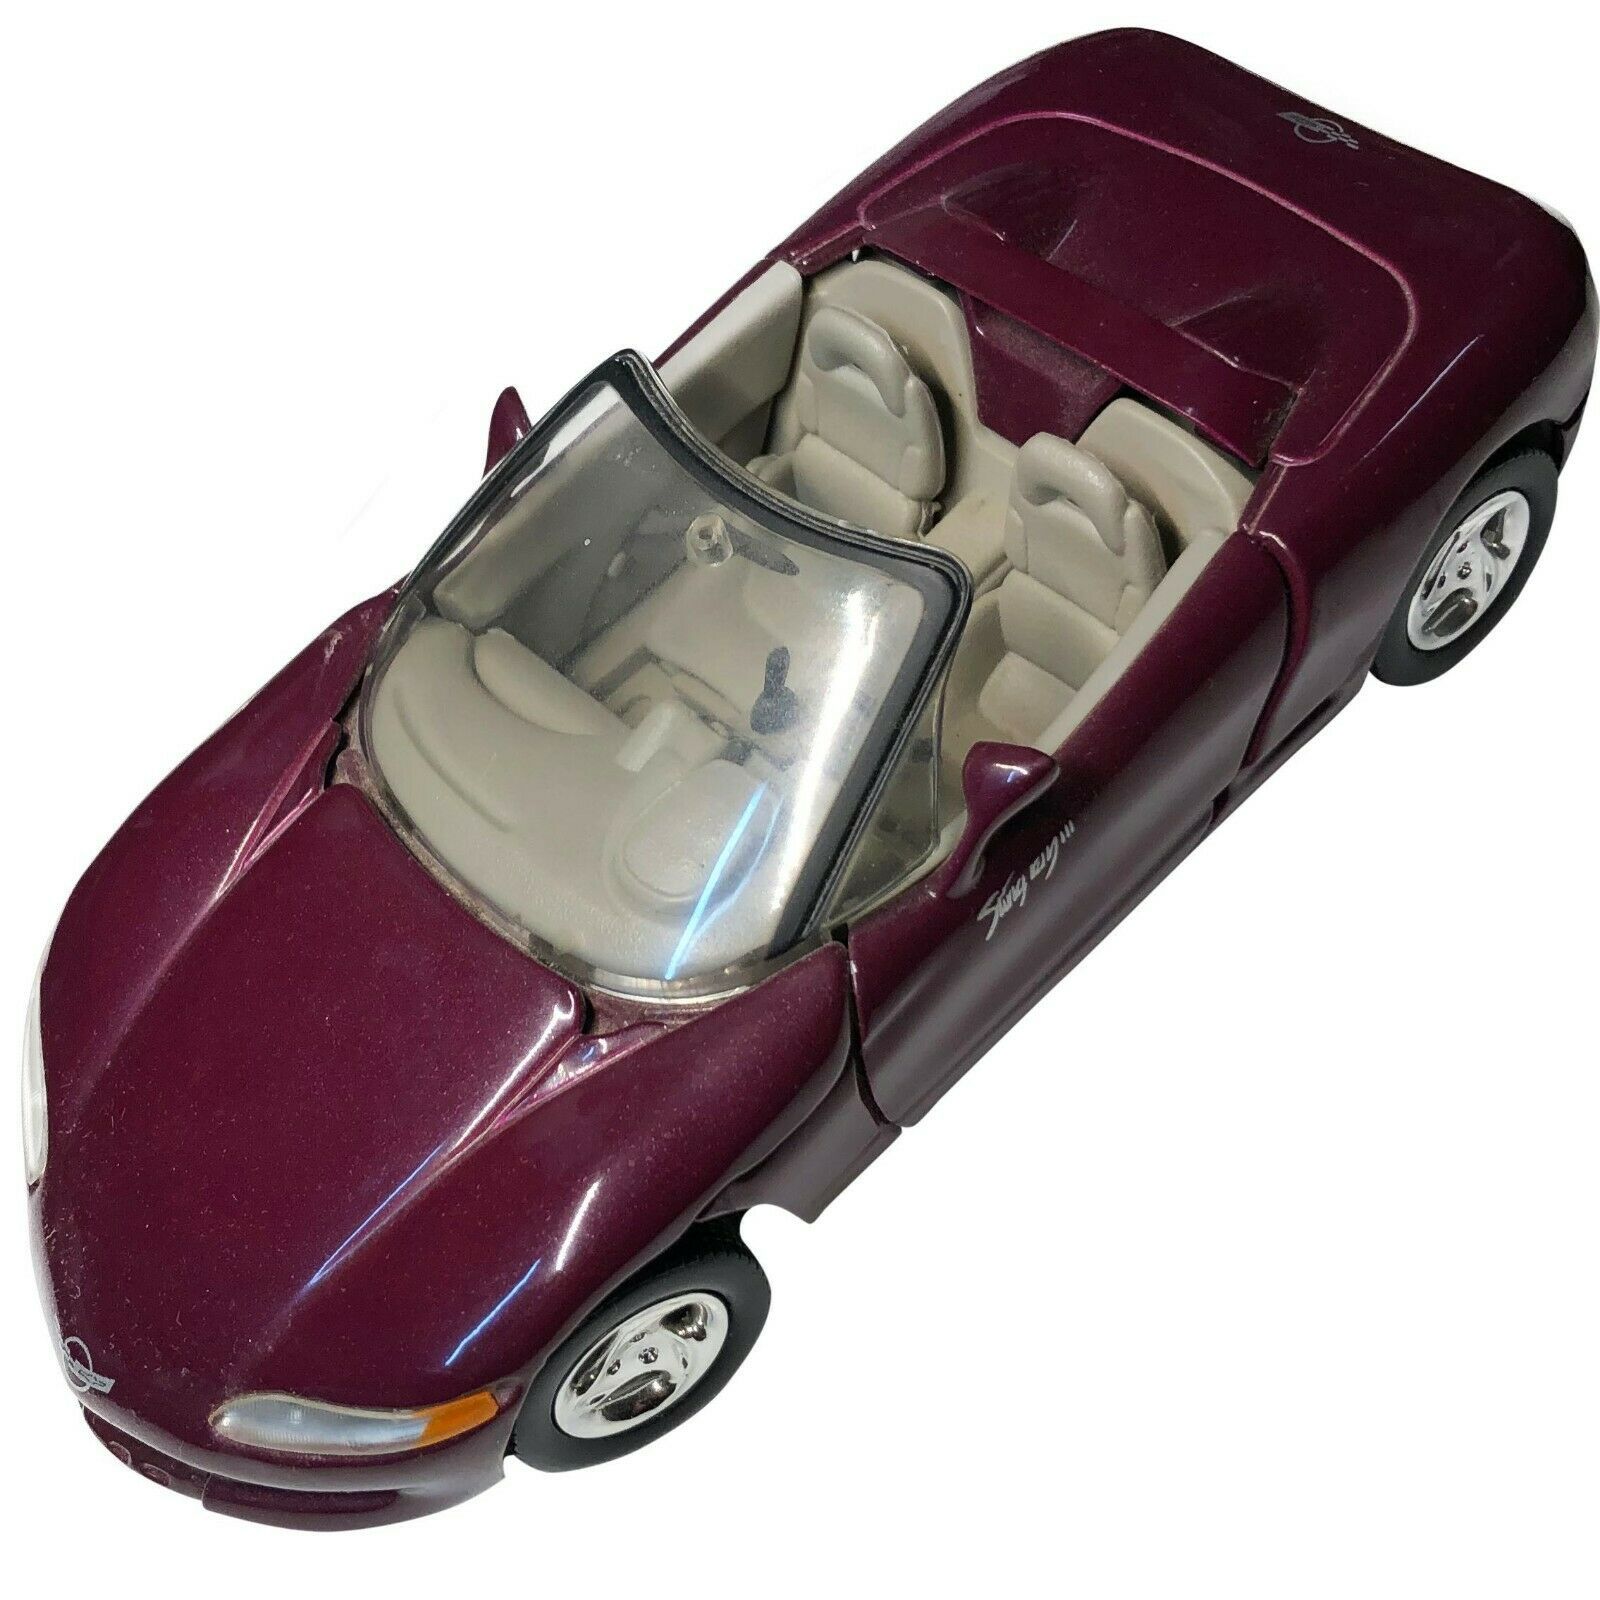 Chevy Corvette Stingray III Die-cast Car 1:24 Motormax 8" No. 68019 #452 - $19.99